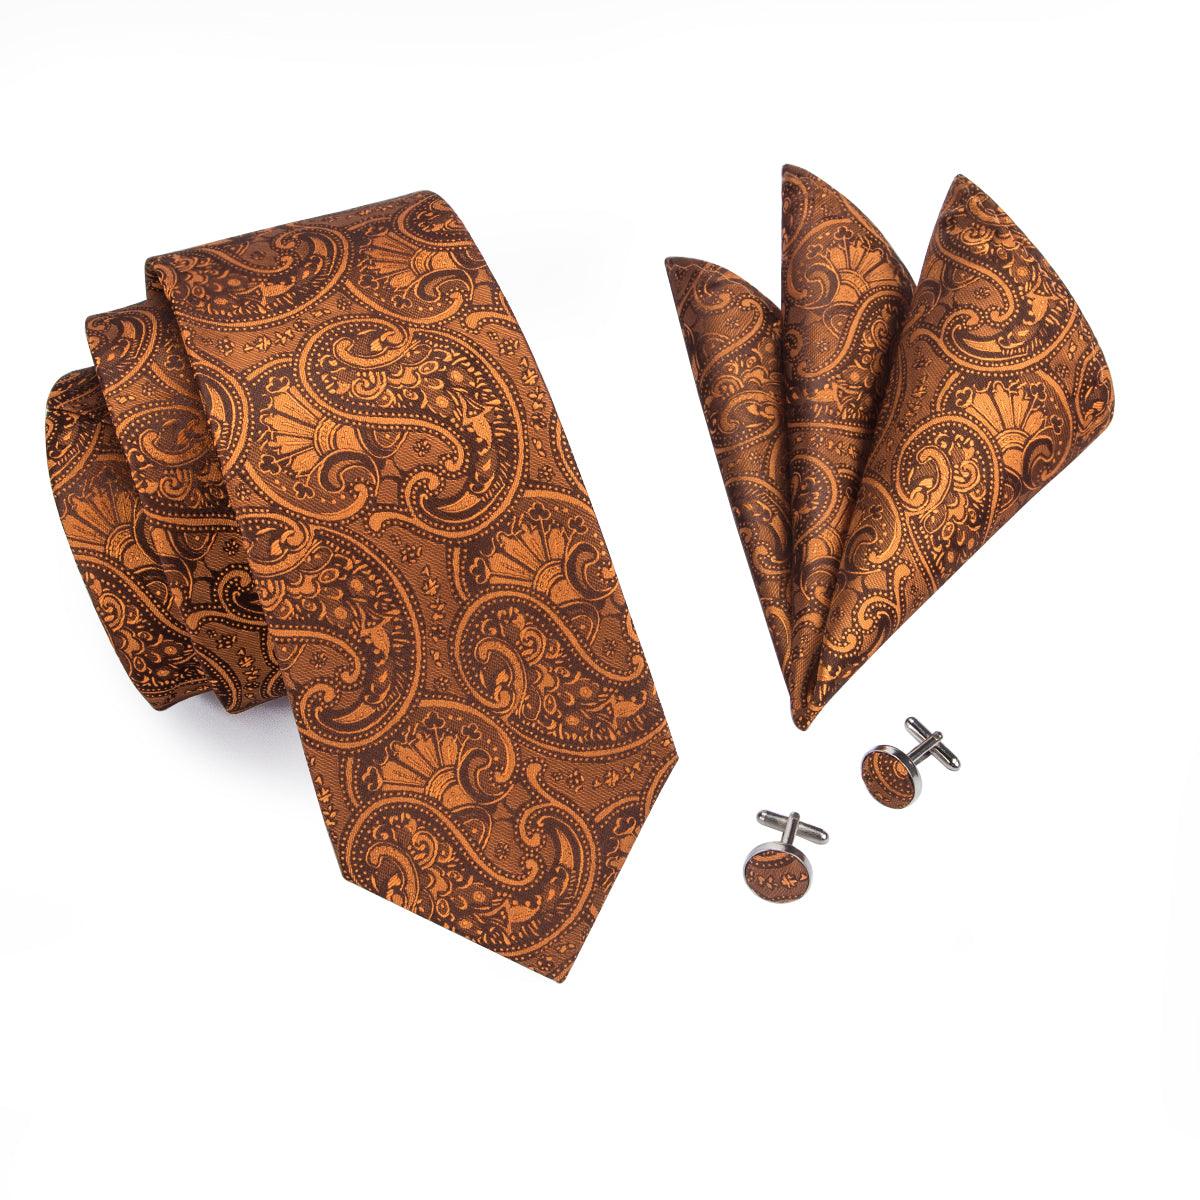 Brown Jacquare Woven Silk Tie Pocket Square Cufflink Set - STYLETIE